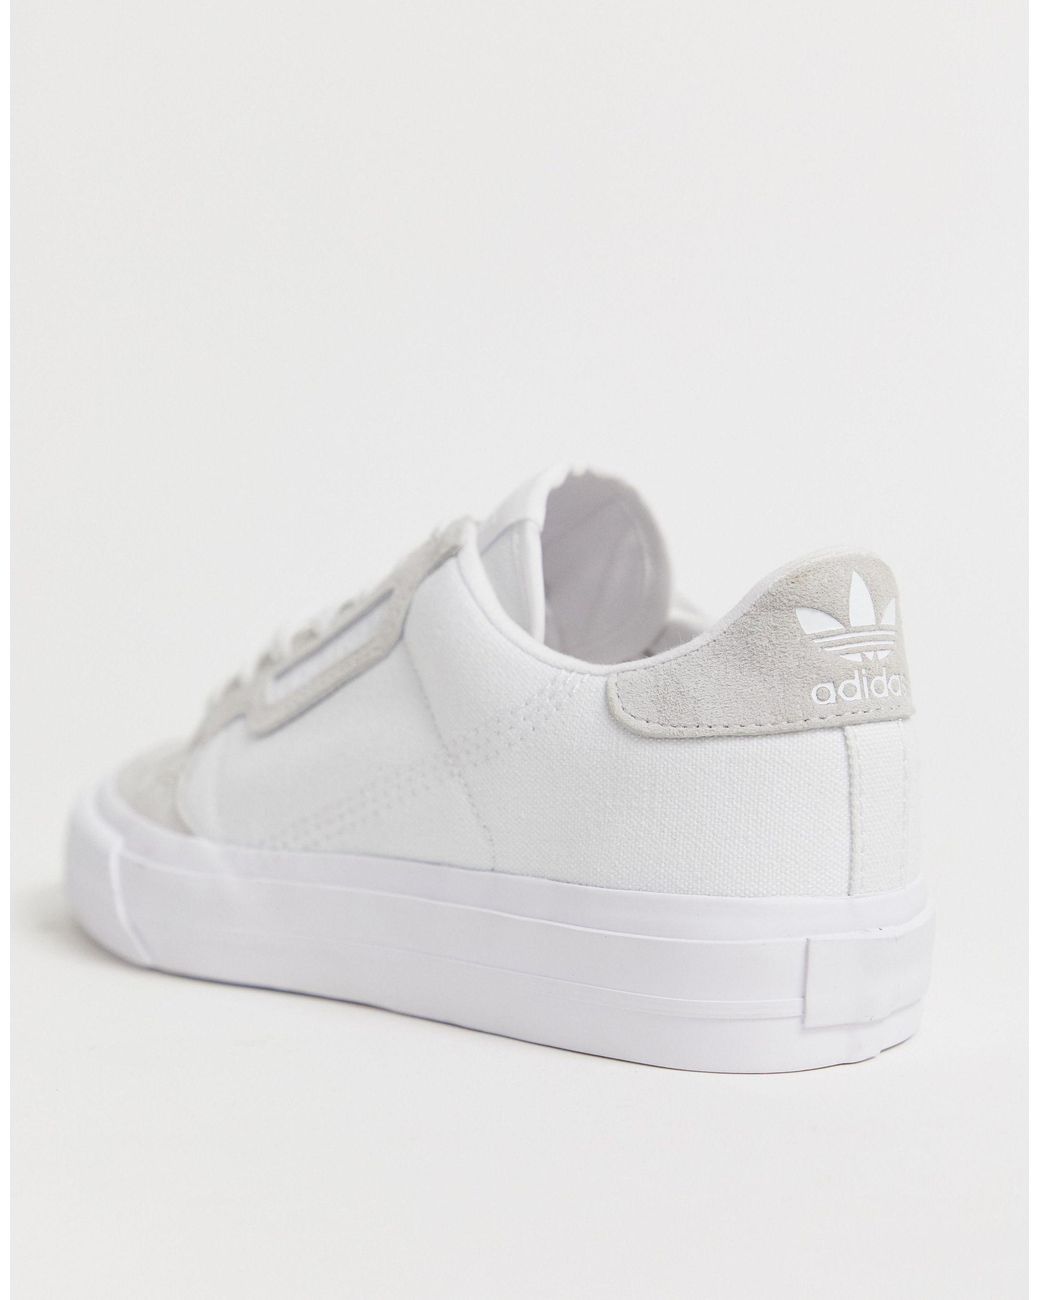 adidas Originals – continental 80 vulc – e sneaker in Weiß | Lyst AT